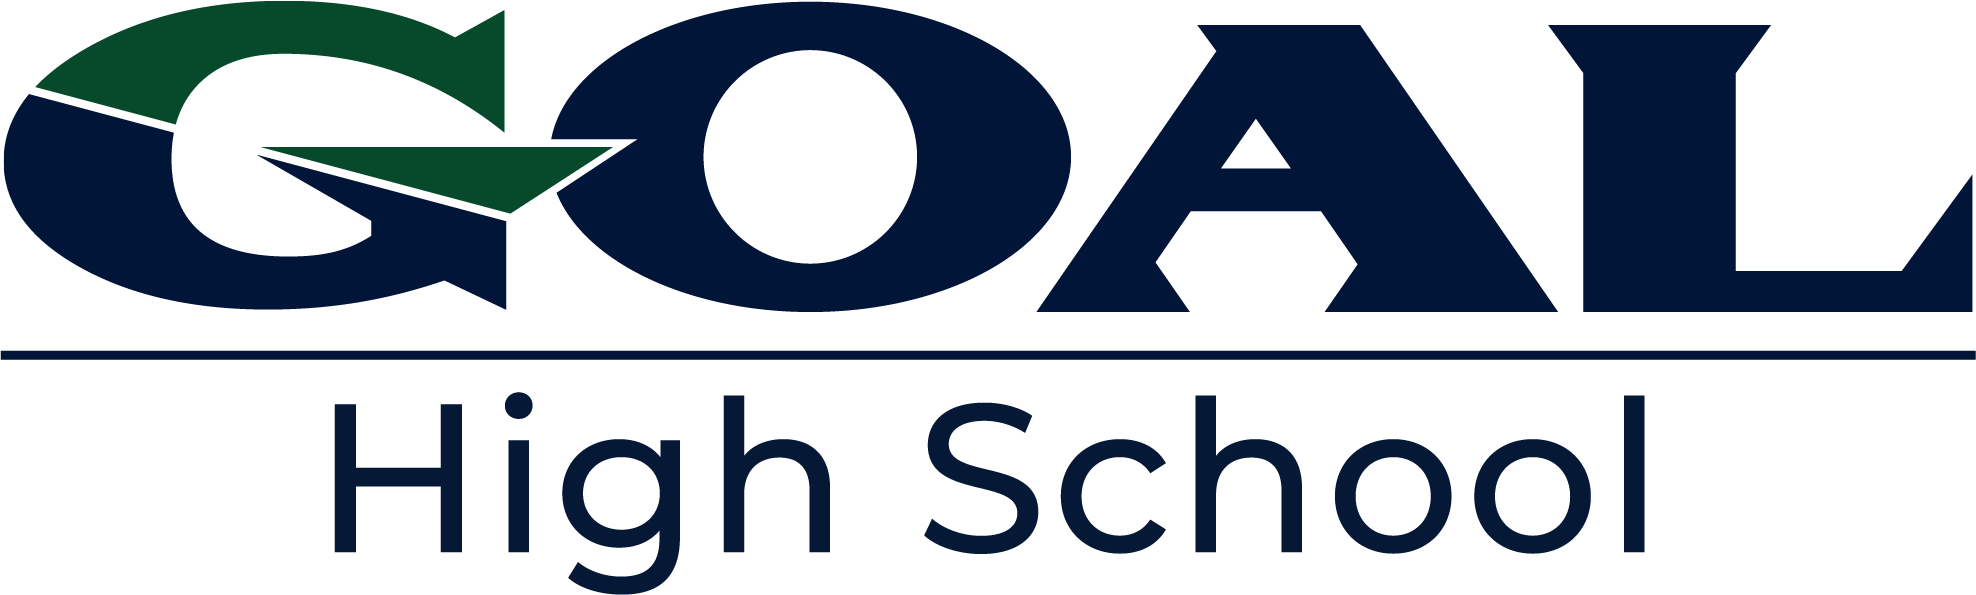 GOAL Academy High School Company Logo